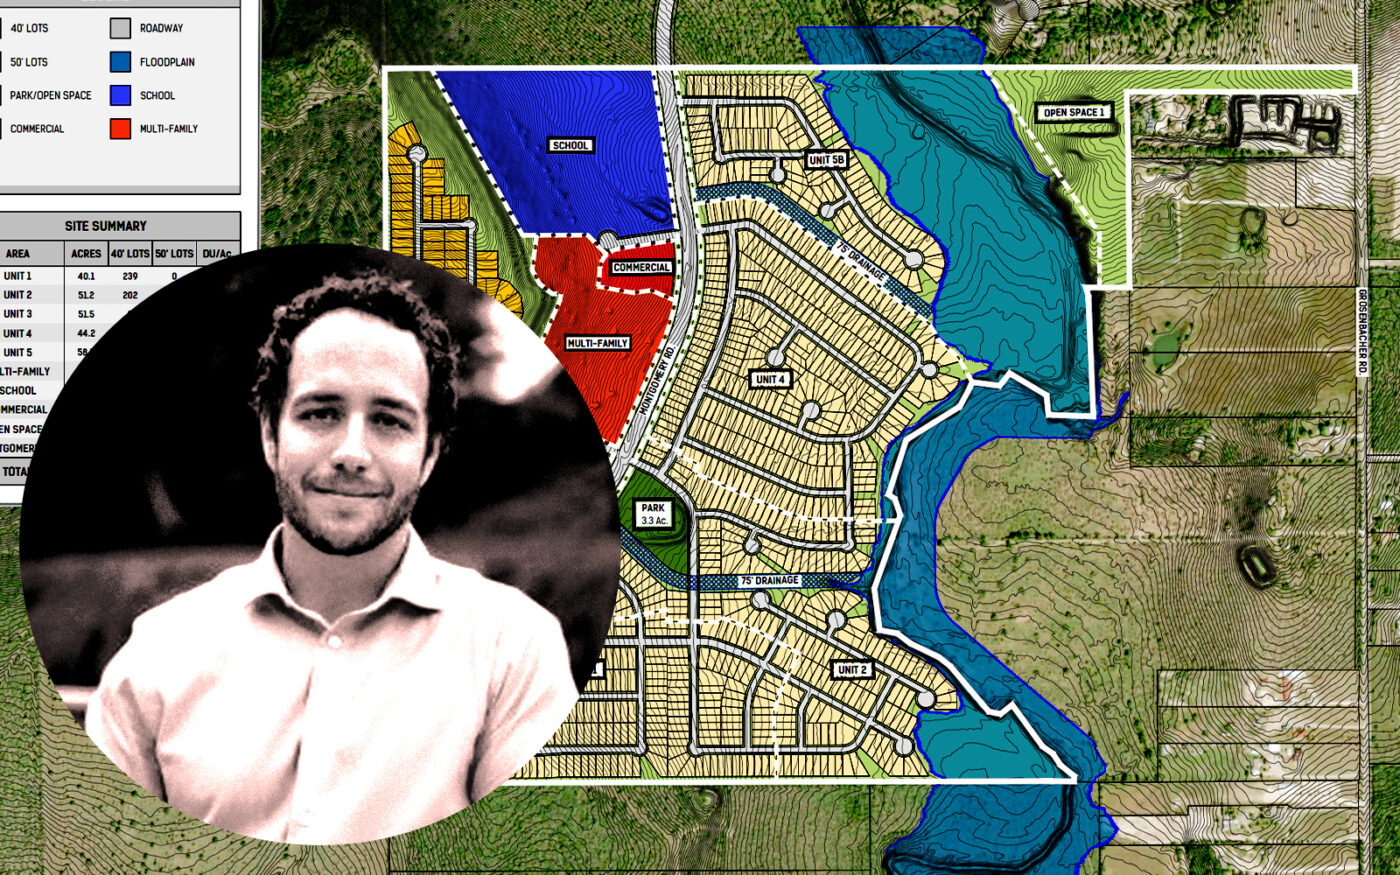 Mosaic co-founder Blake Yantis and the preliminary master plan of Tres Laurels (Mosaic Land Development, LinkedIn)